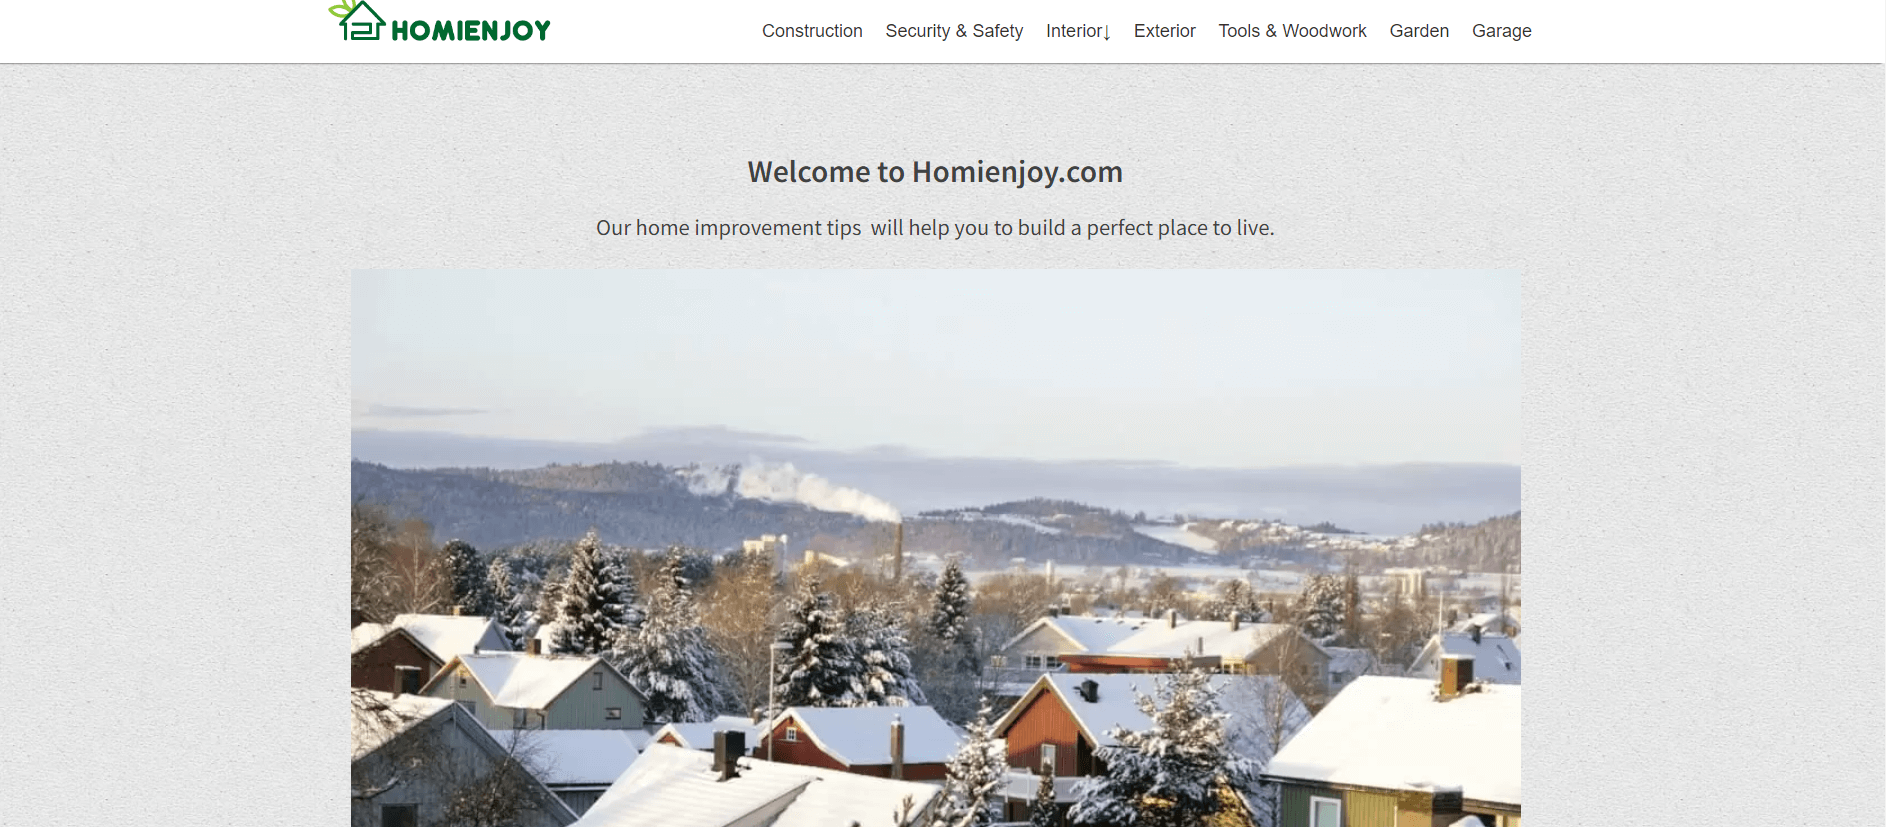 Homienjoy.com